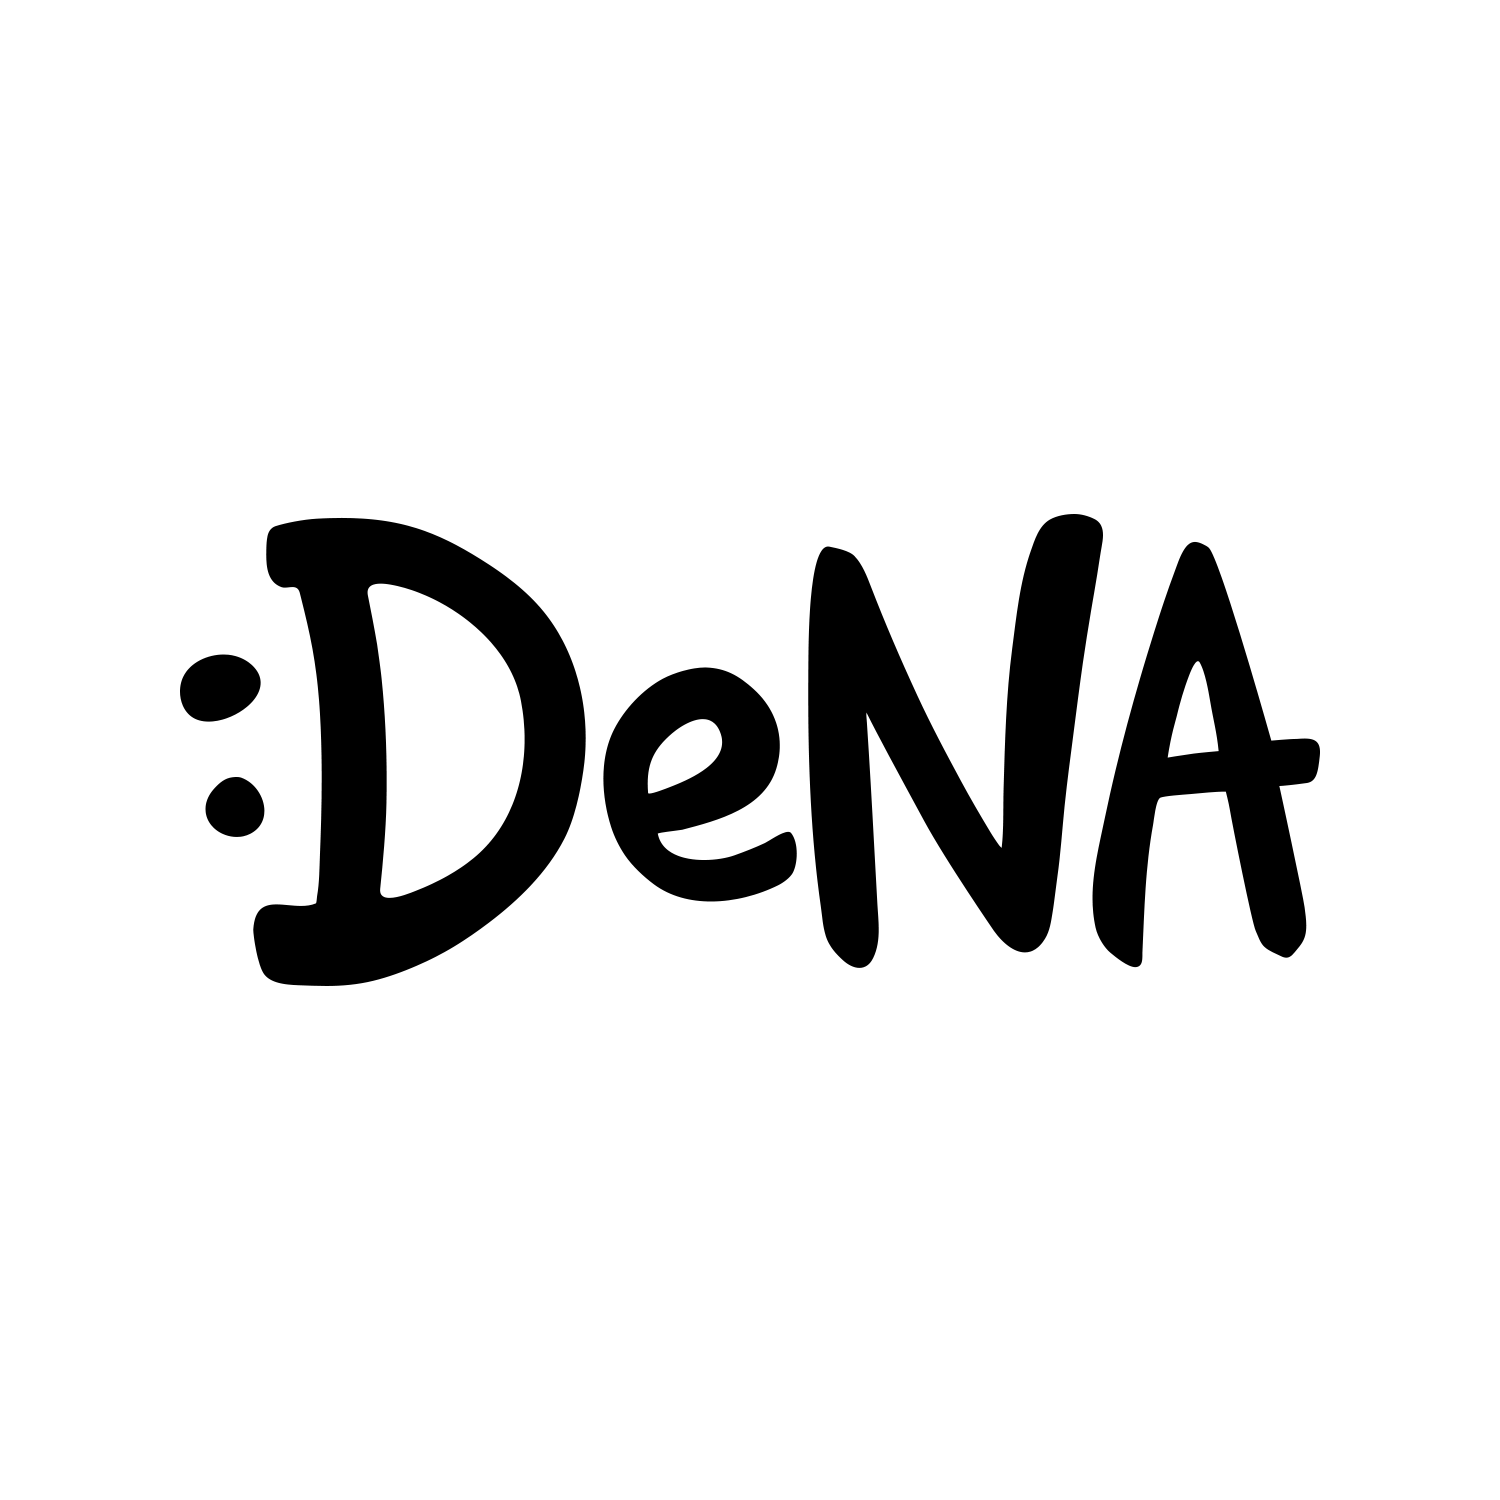 DeNAはゲーム事業やロボットタクシーなど幅広い